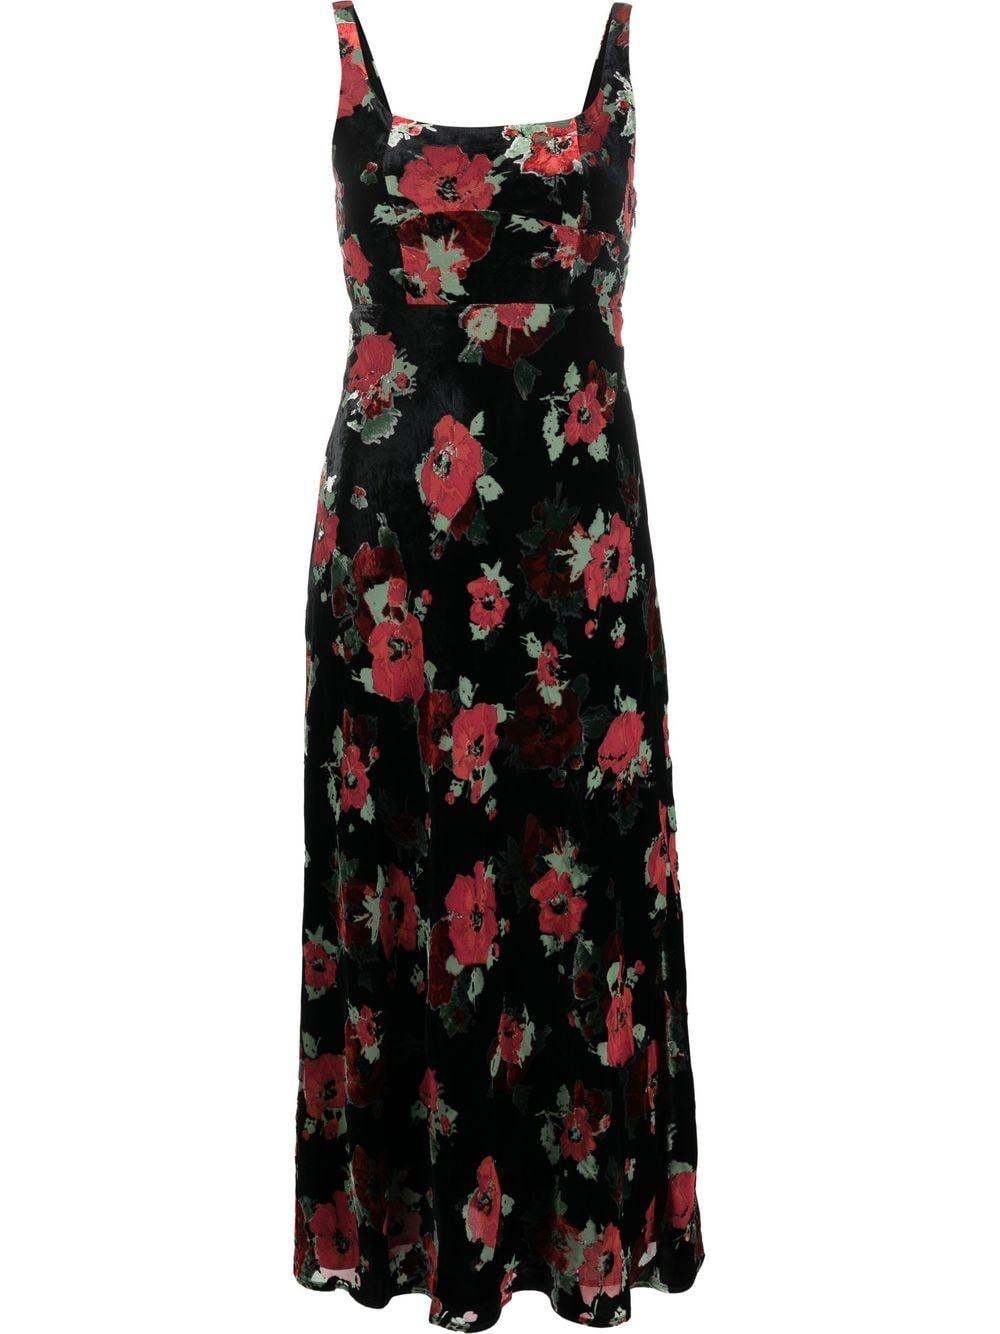 RIXO London Benedict Floral-print Velvet Dress in Black | Lyst